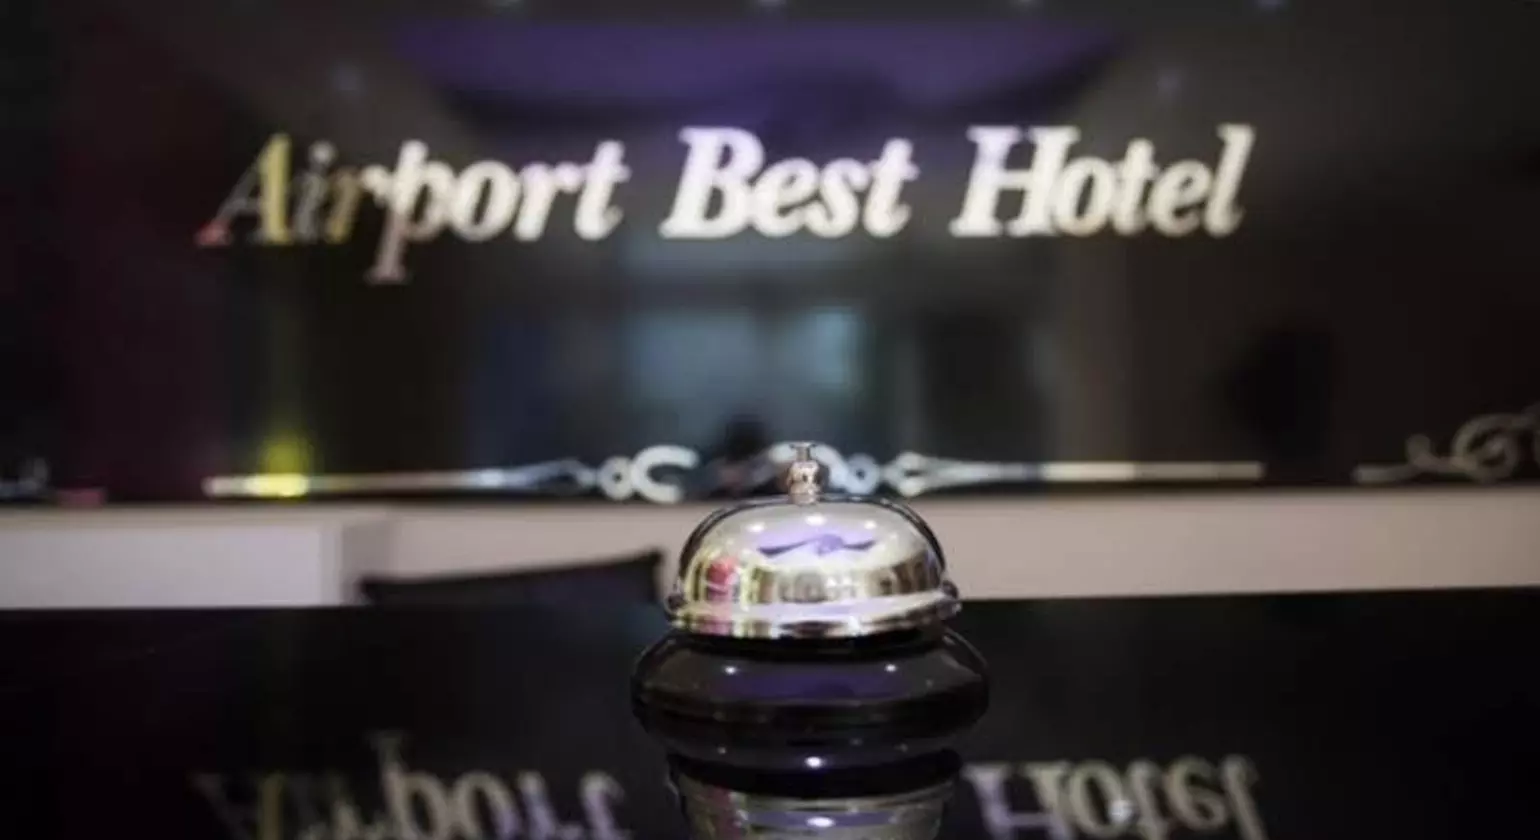 Airport Best Hotel